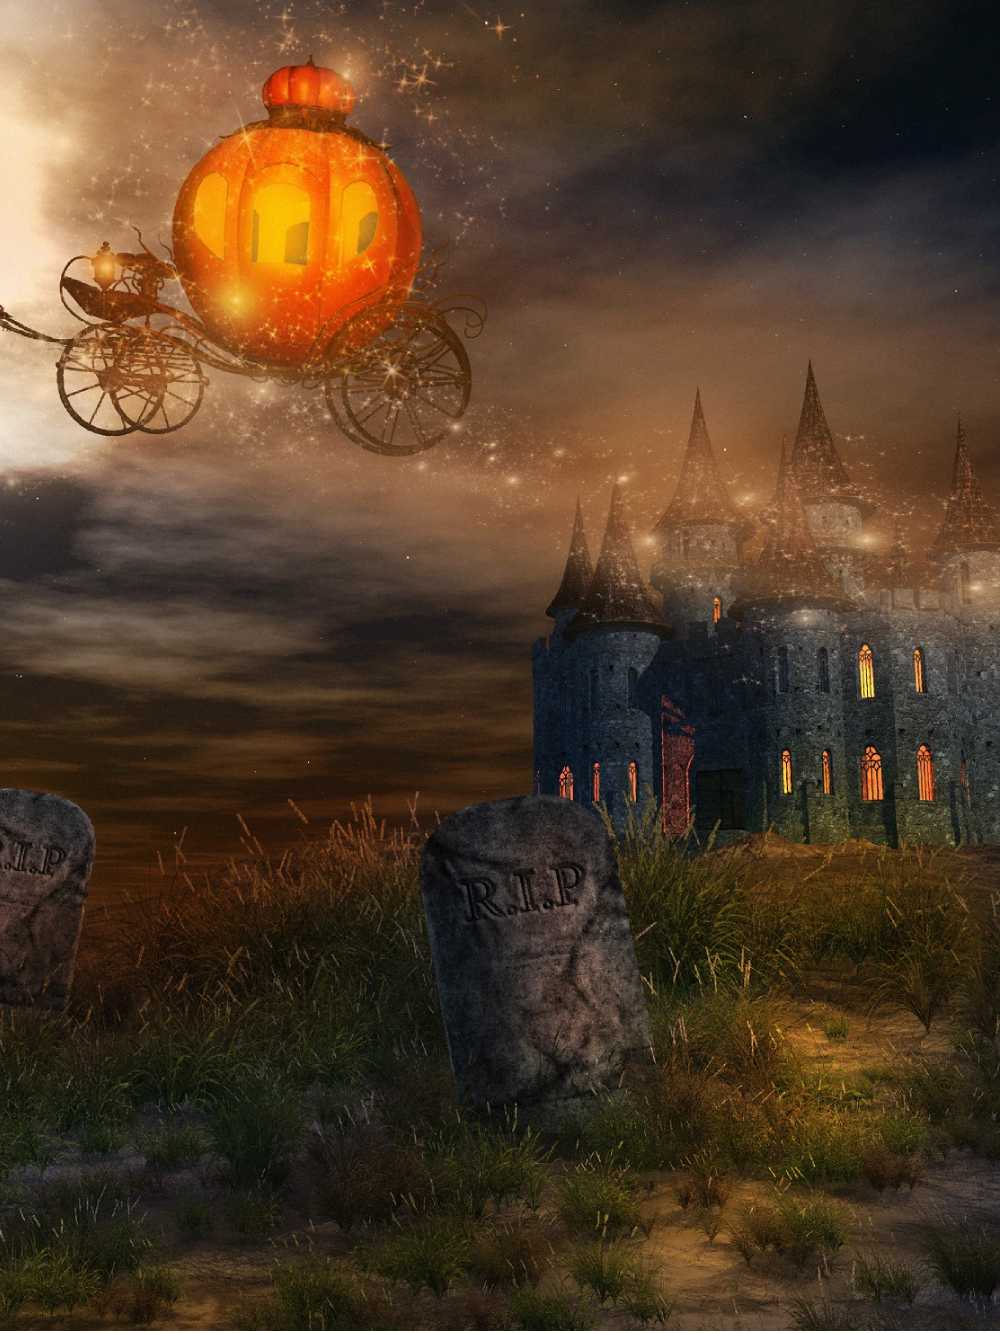 Spooky Halloween Grave And Castle Pumpkin Car Backdrop IBD-246874 size:1.5x2